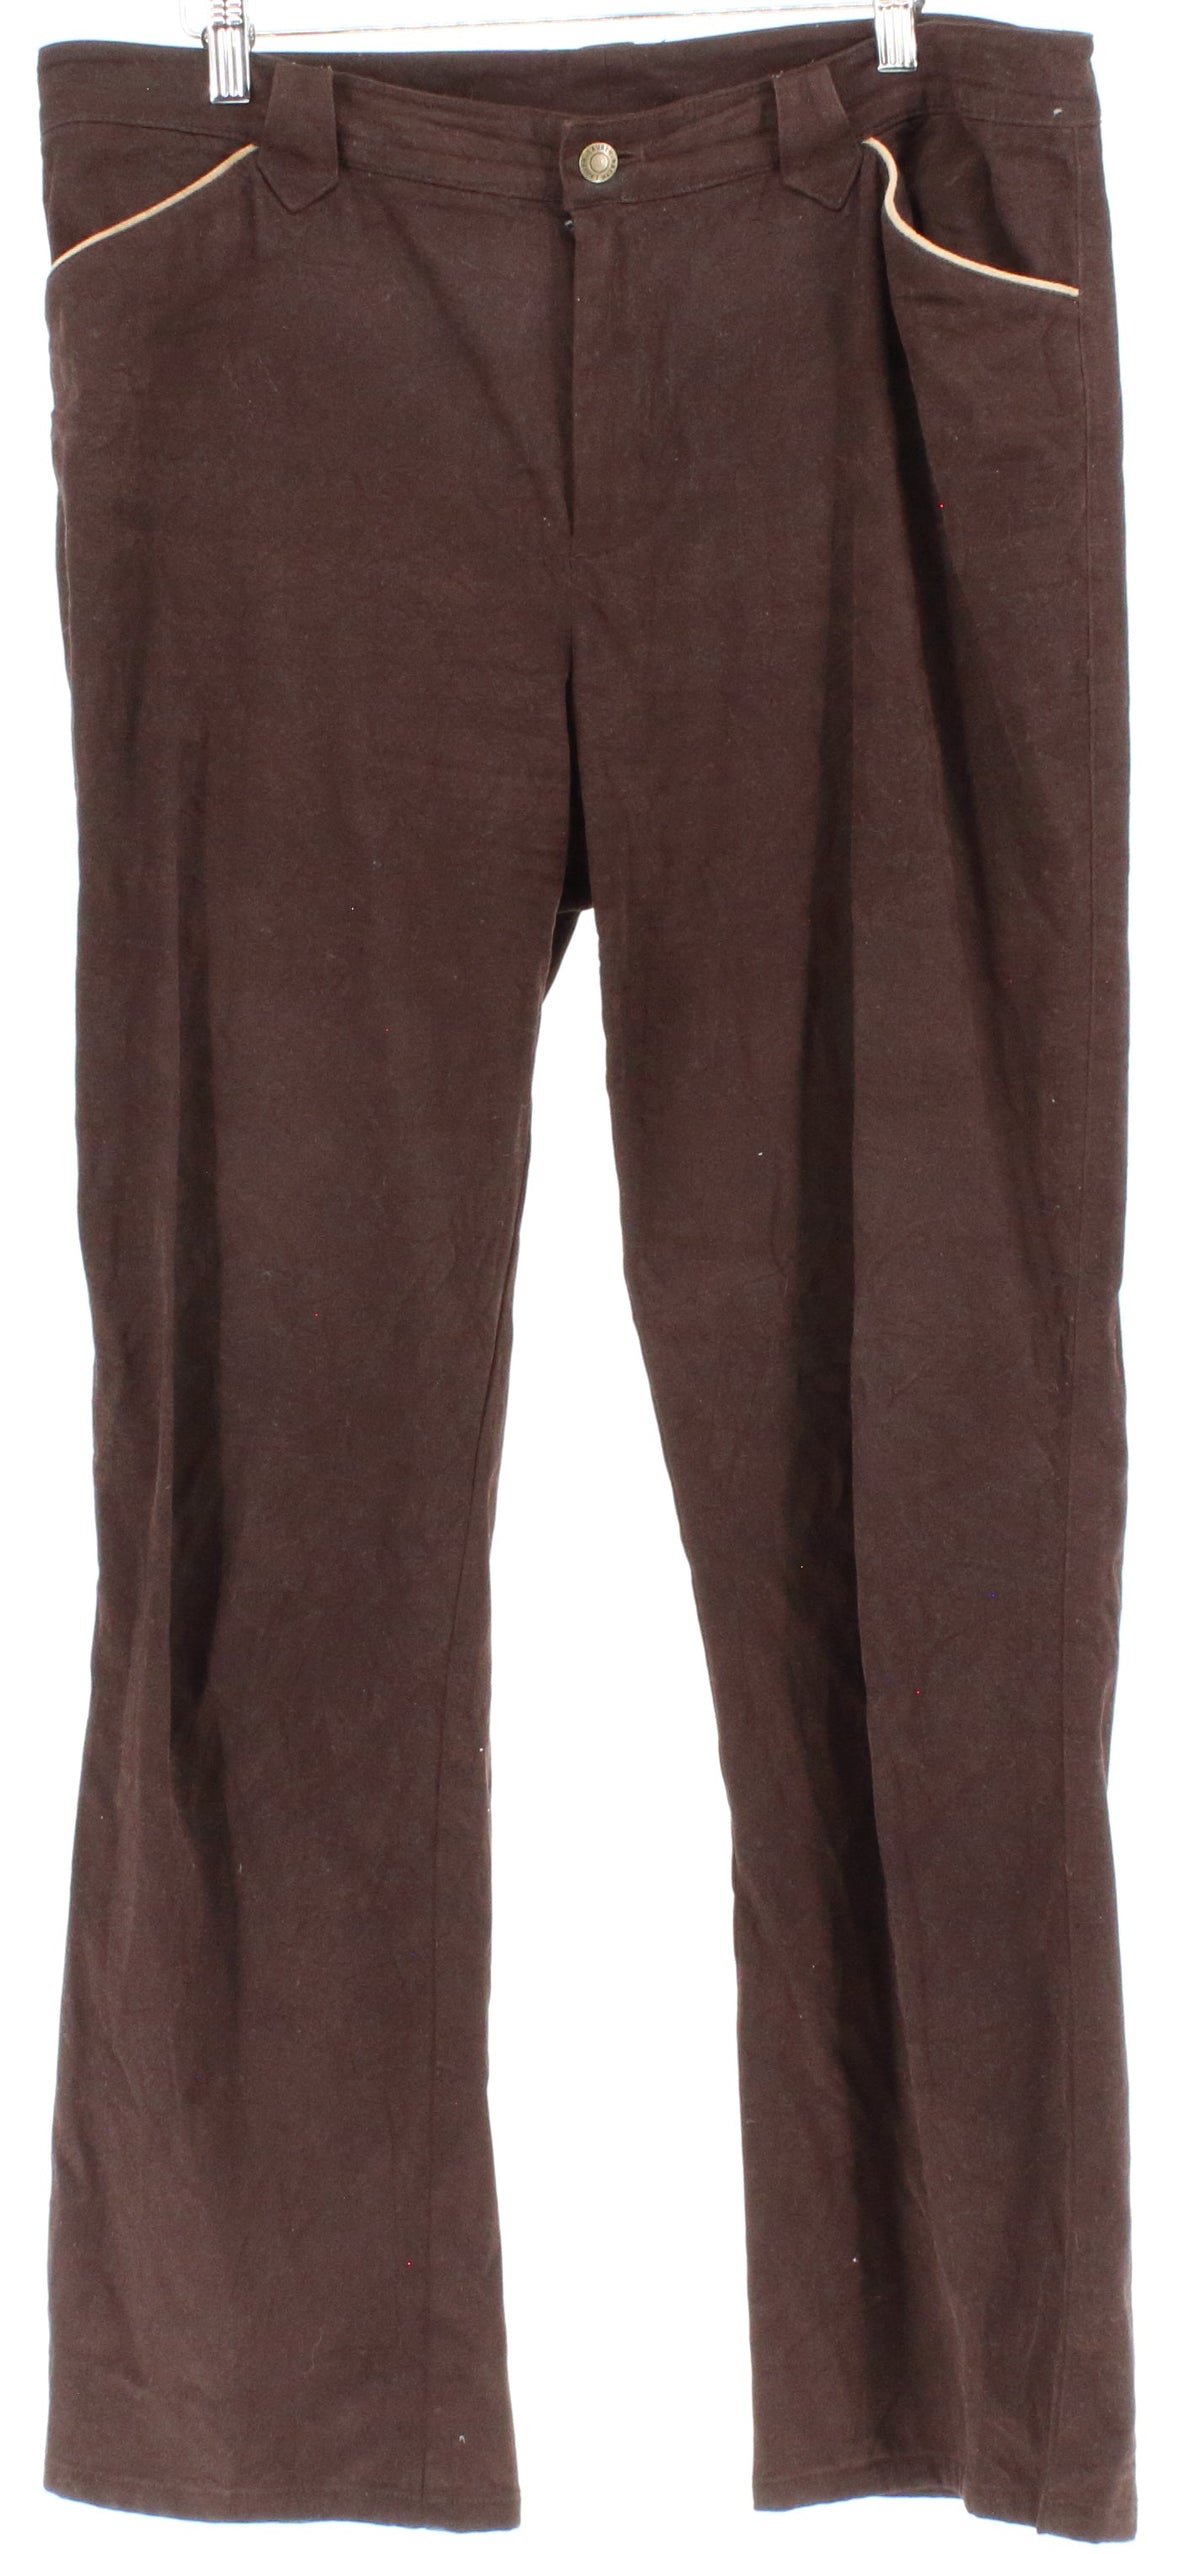 Ralph Lauren Lauren Jeans Co Brown Straight leg Trouser Pants